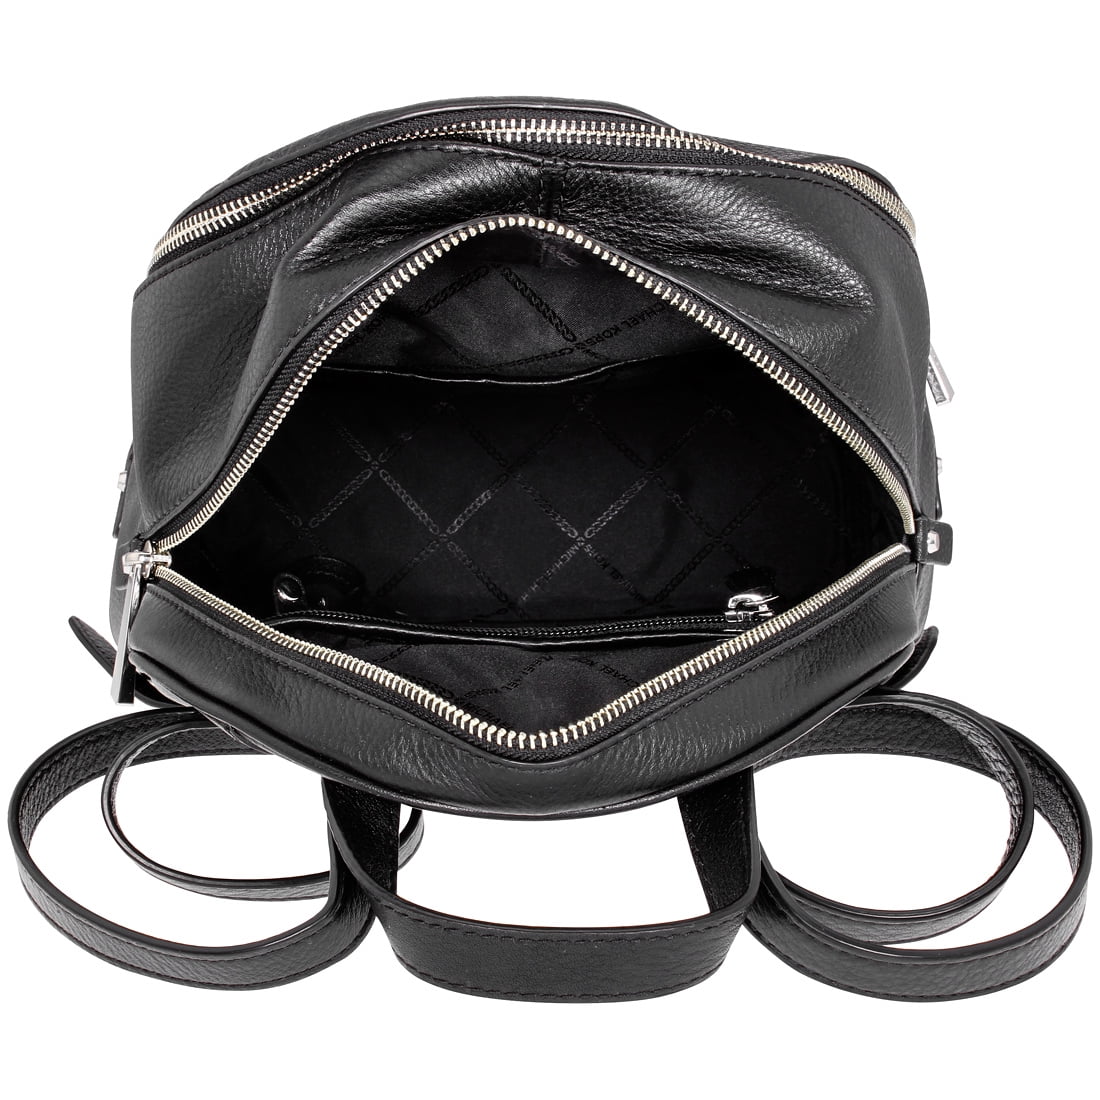 Michael Kors Rhea Zip Medium Backpack Smokey Rose Multi 2 One Size  30S2GEZB8B-990